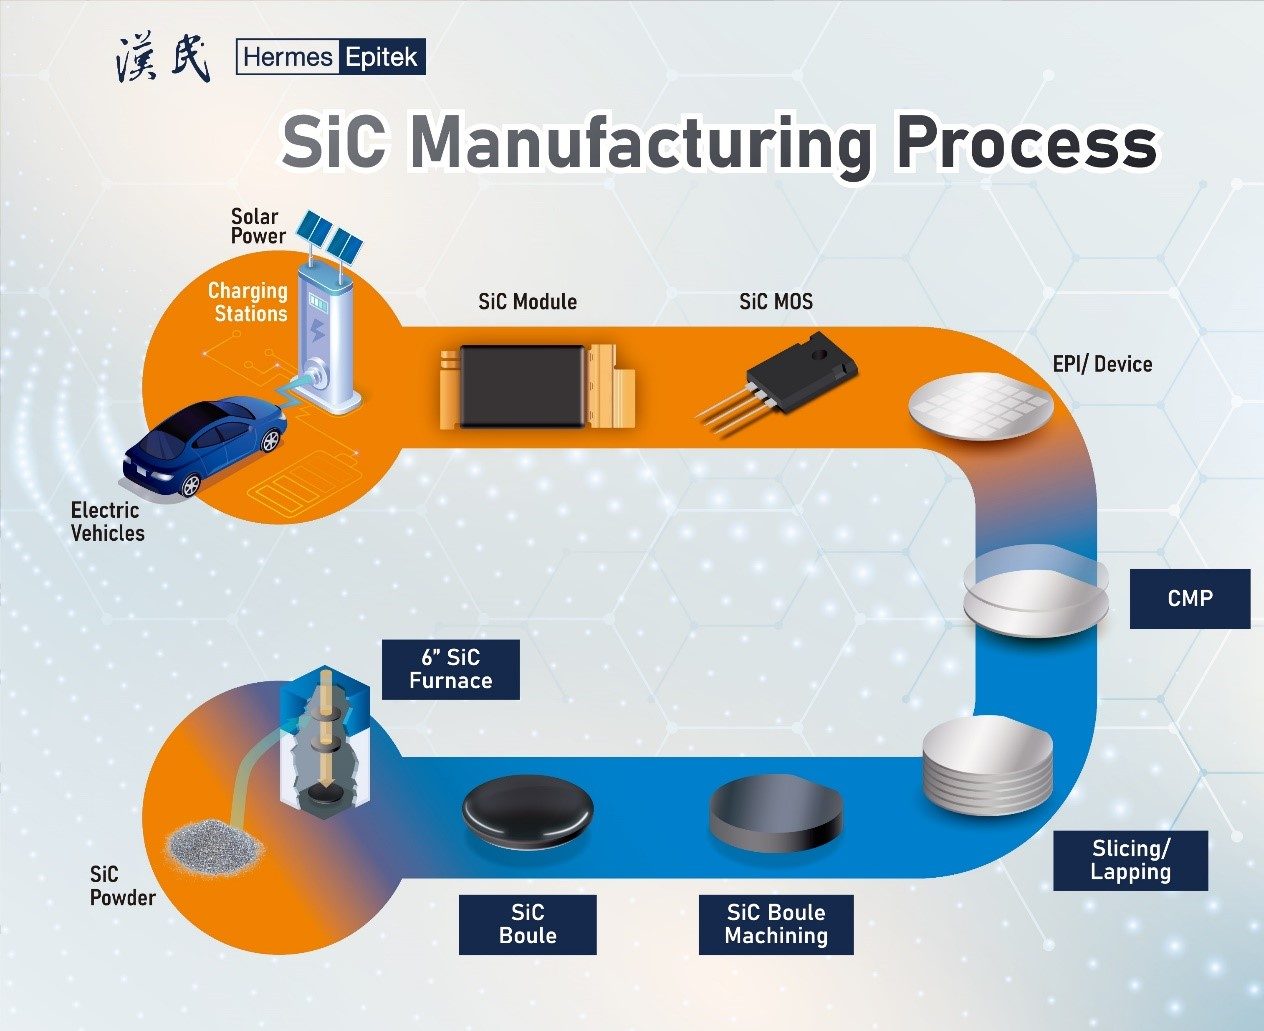 SiC Manufacturing Process